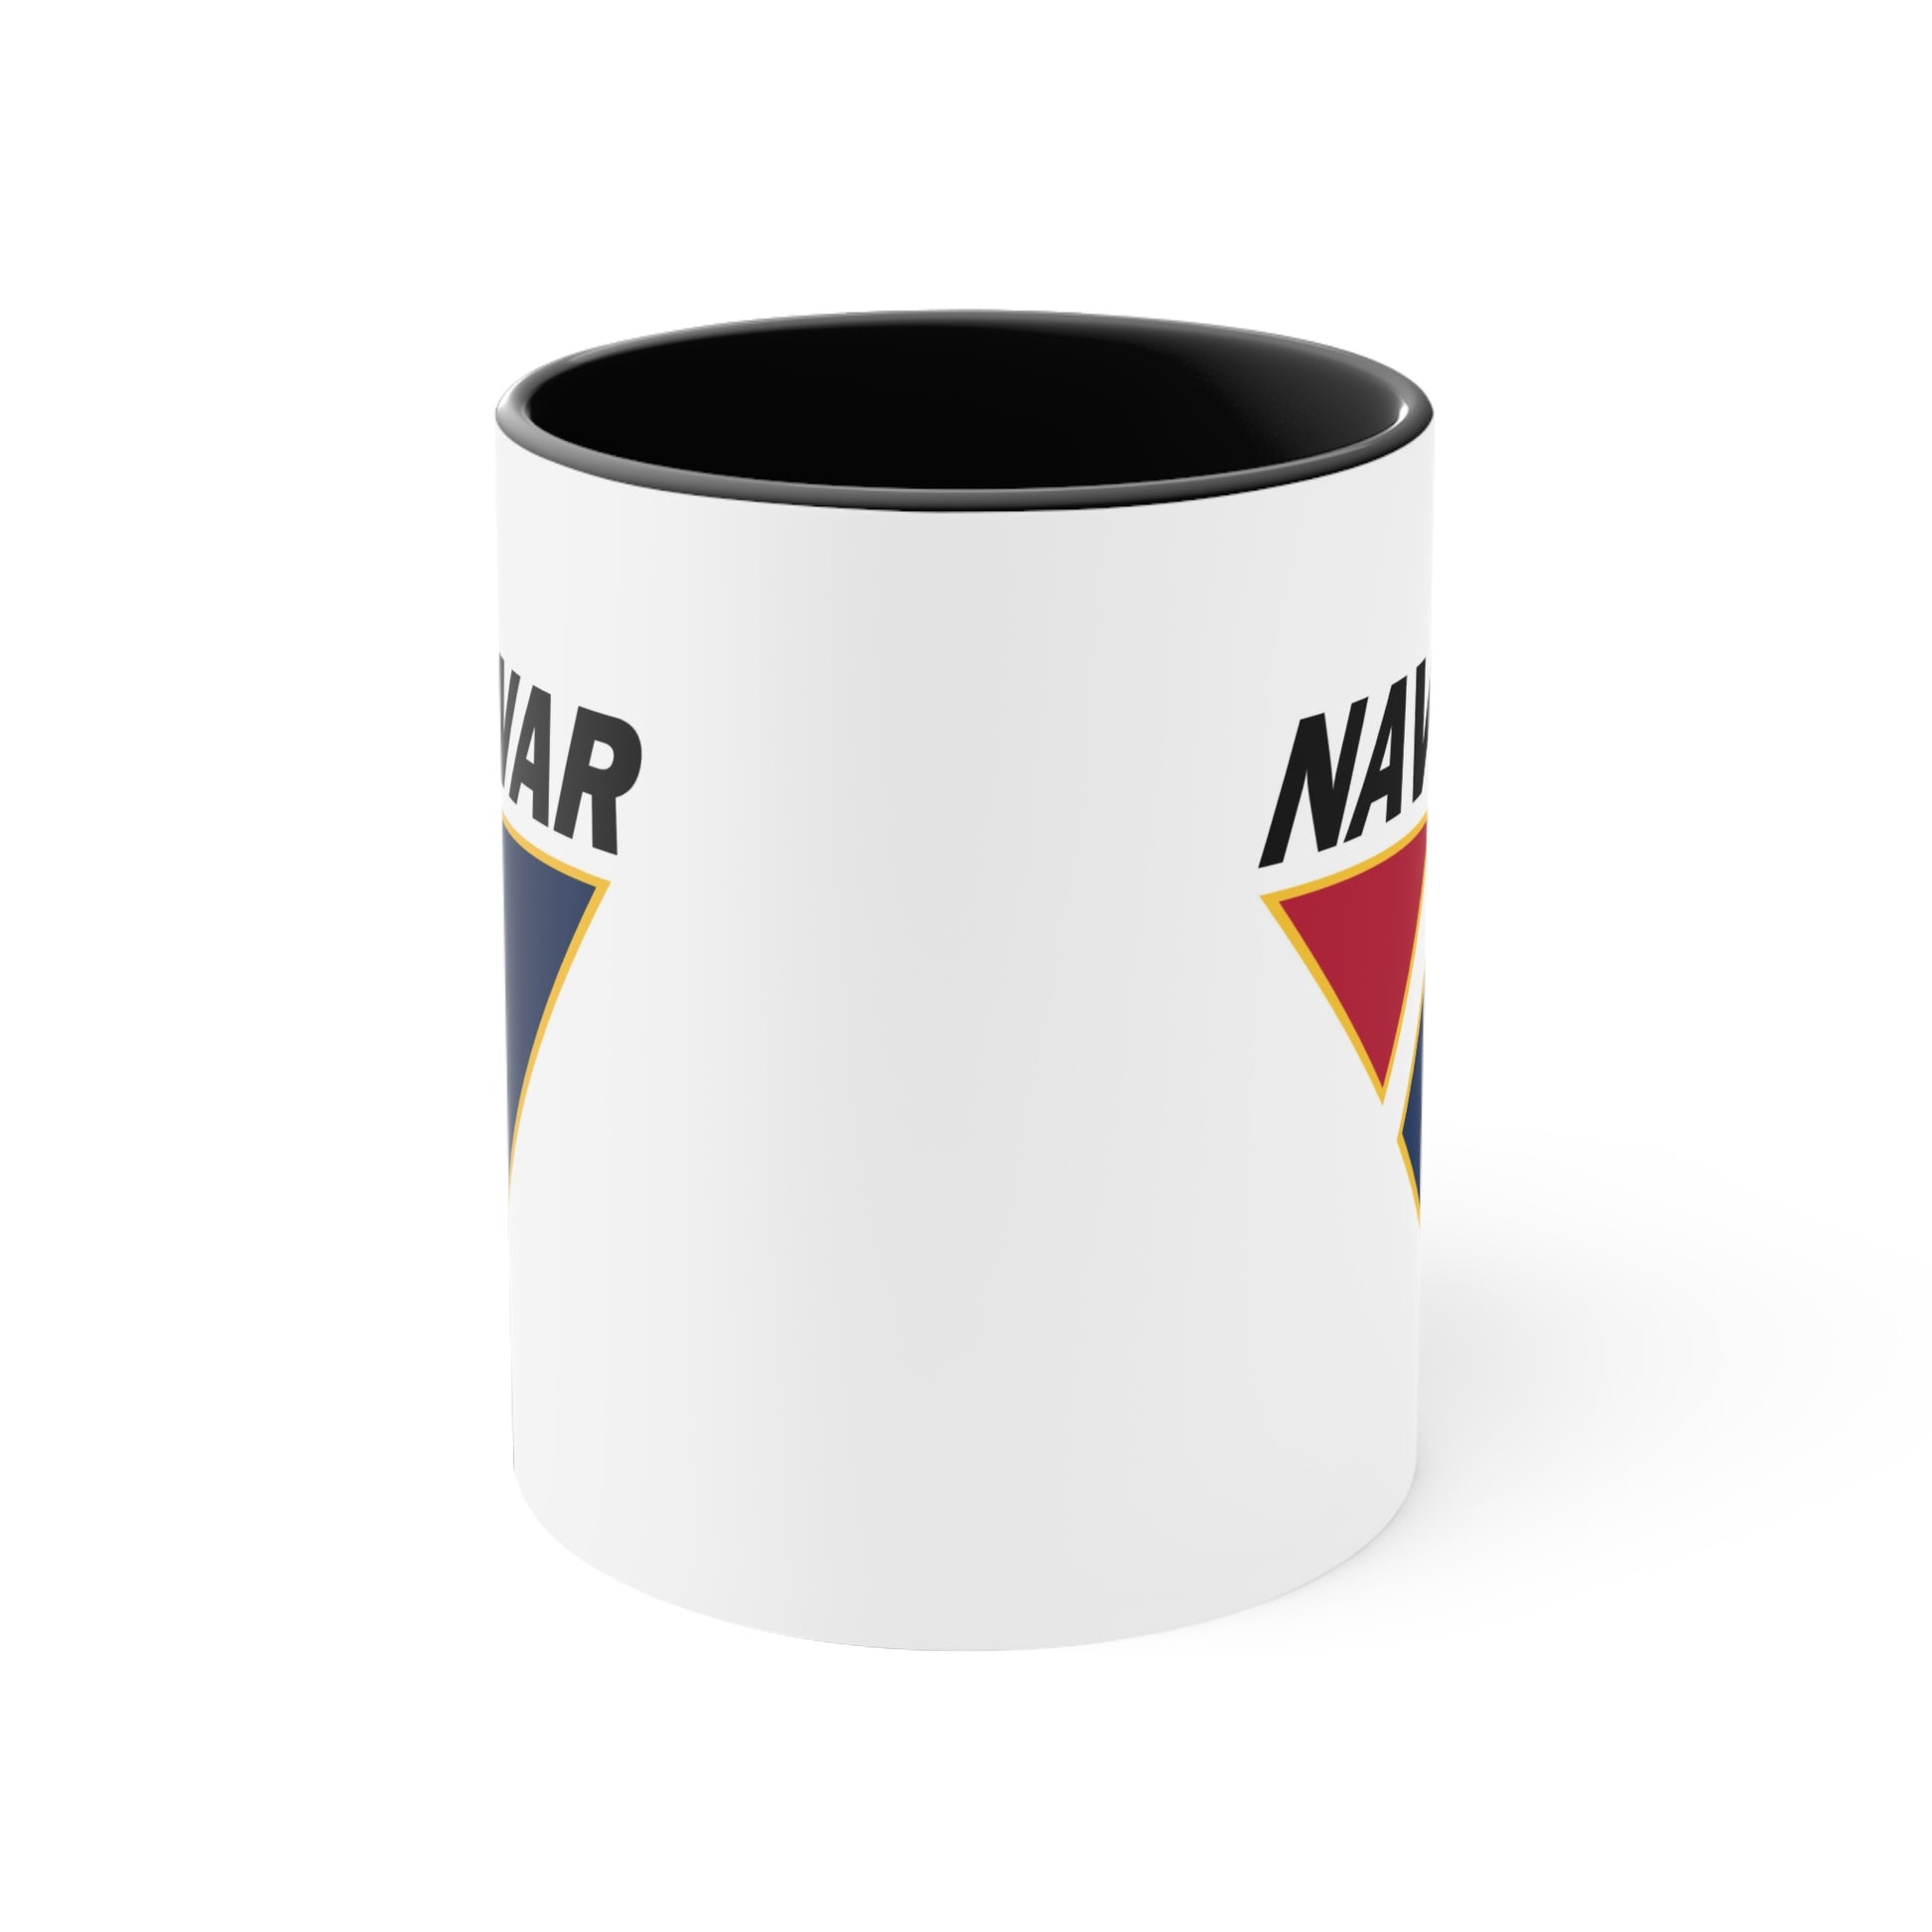 US Navy NAVWAR Coffee Mug - Black Accent Two Tone White Ceramic 11oz Size by TheGlassyLass.com